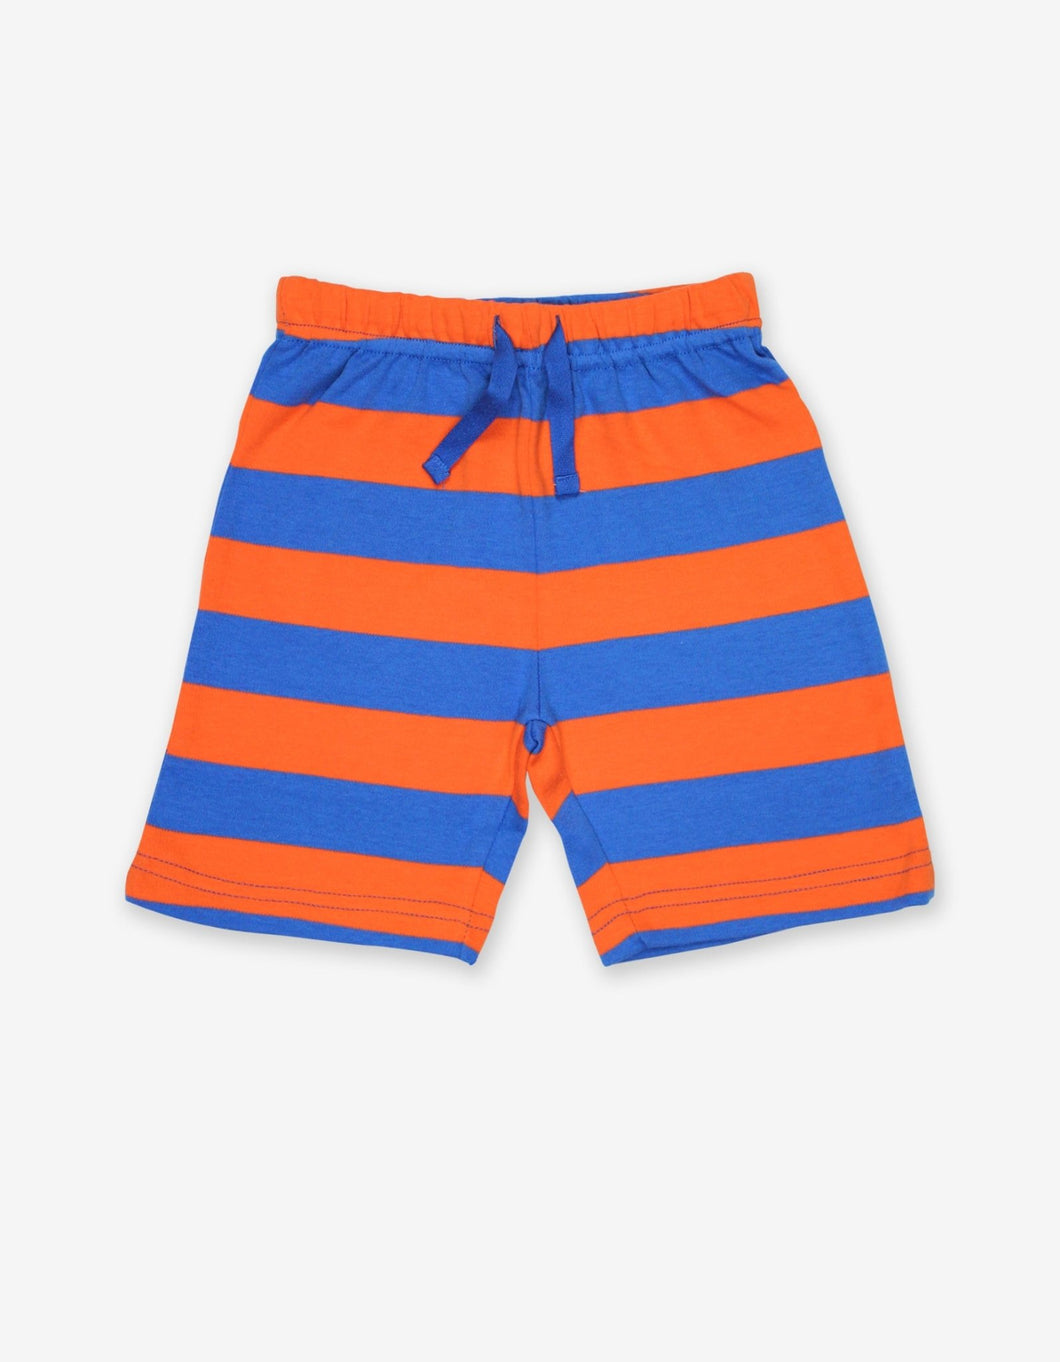 Organic Orange and Blue Stripe Shorts - Toby Tiger